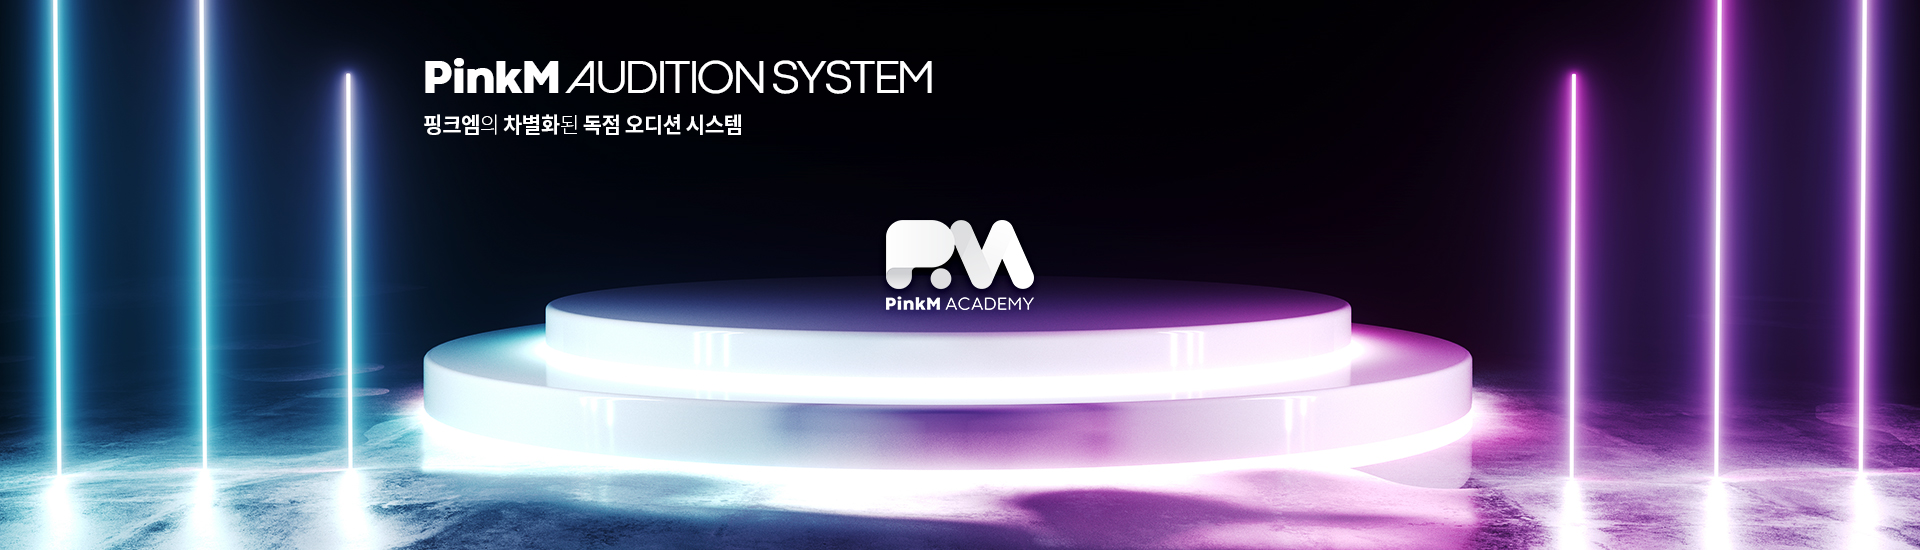 Pinkm Audition system 핑크엠의 차별화된 독점 오디션 시스템